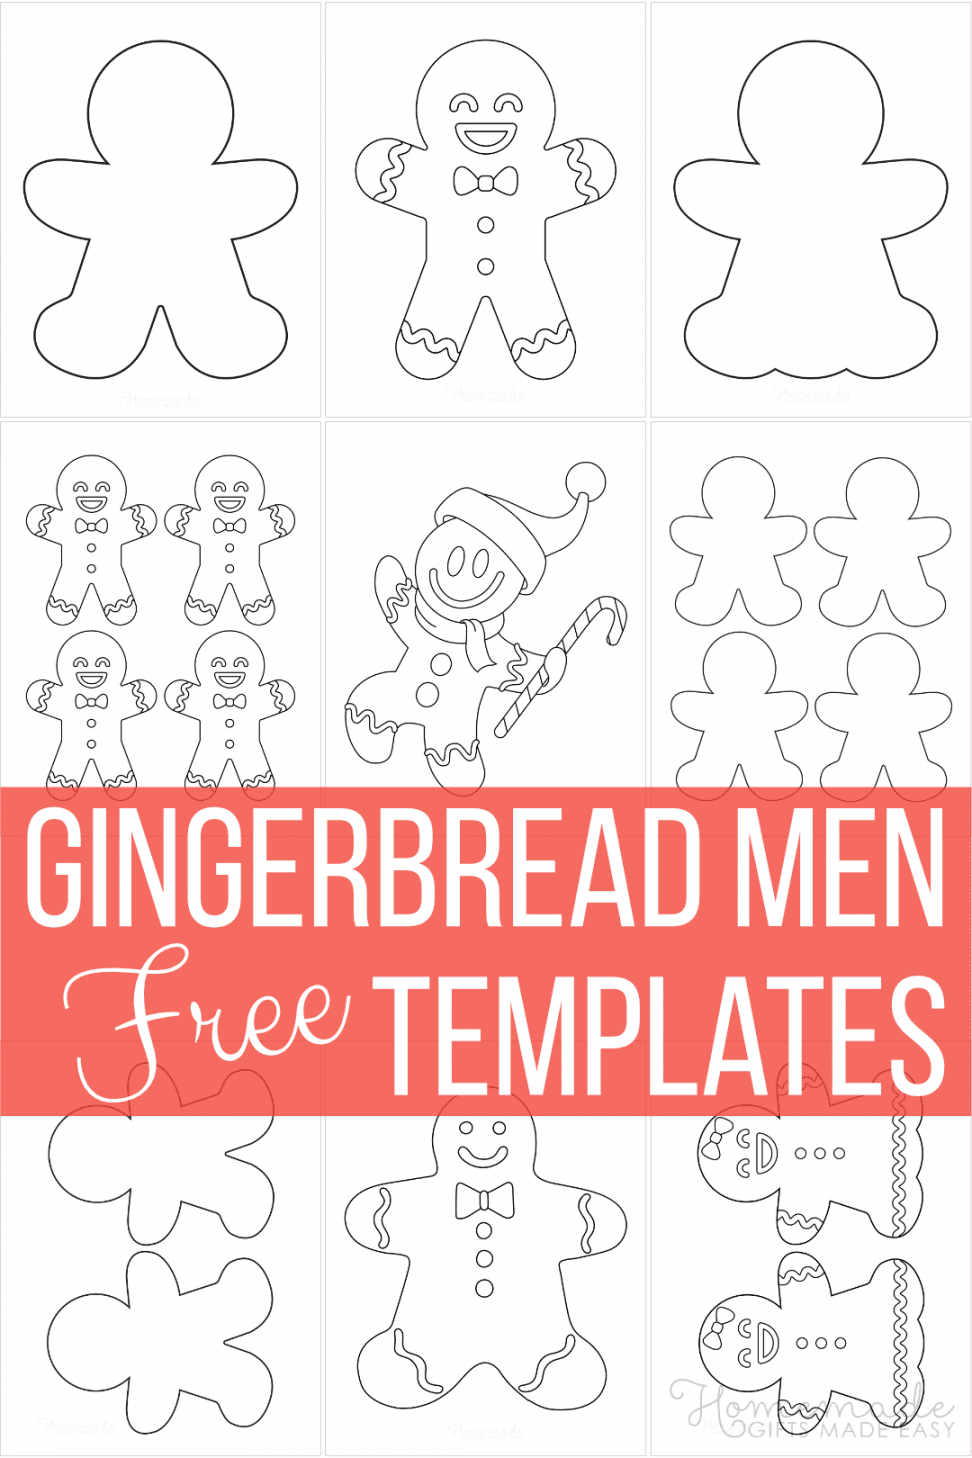 Free Printable Gingerbread Man Templates & Coloring Pages - FREE Printables - Gingerbread Man Template Printable